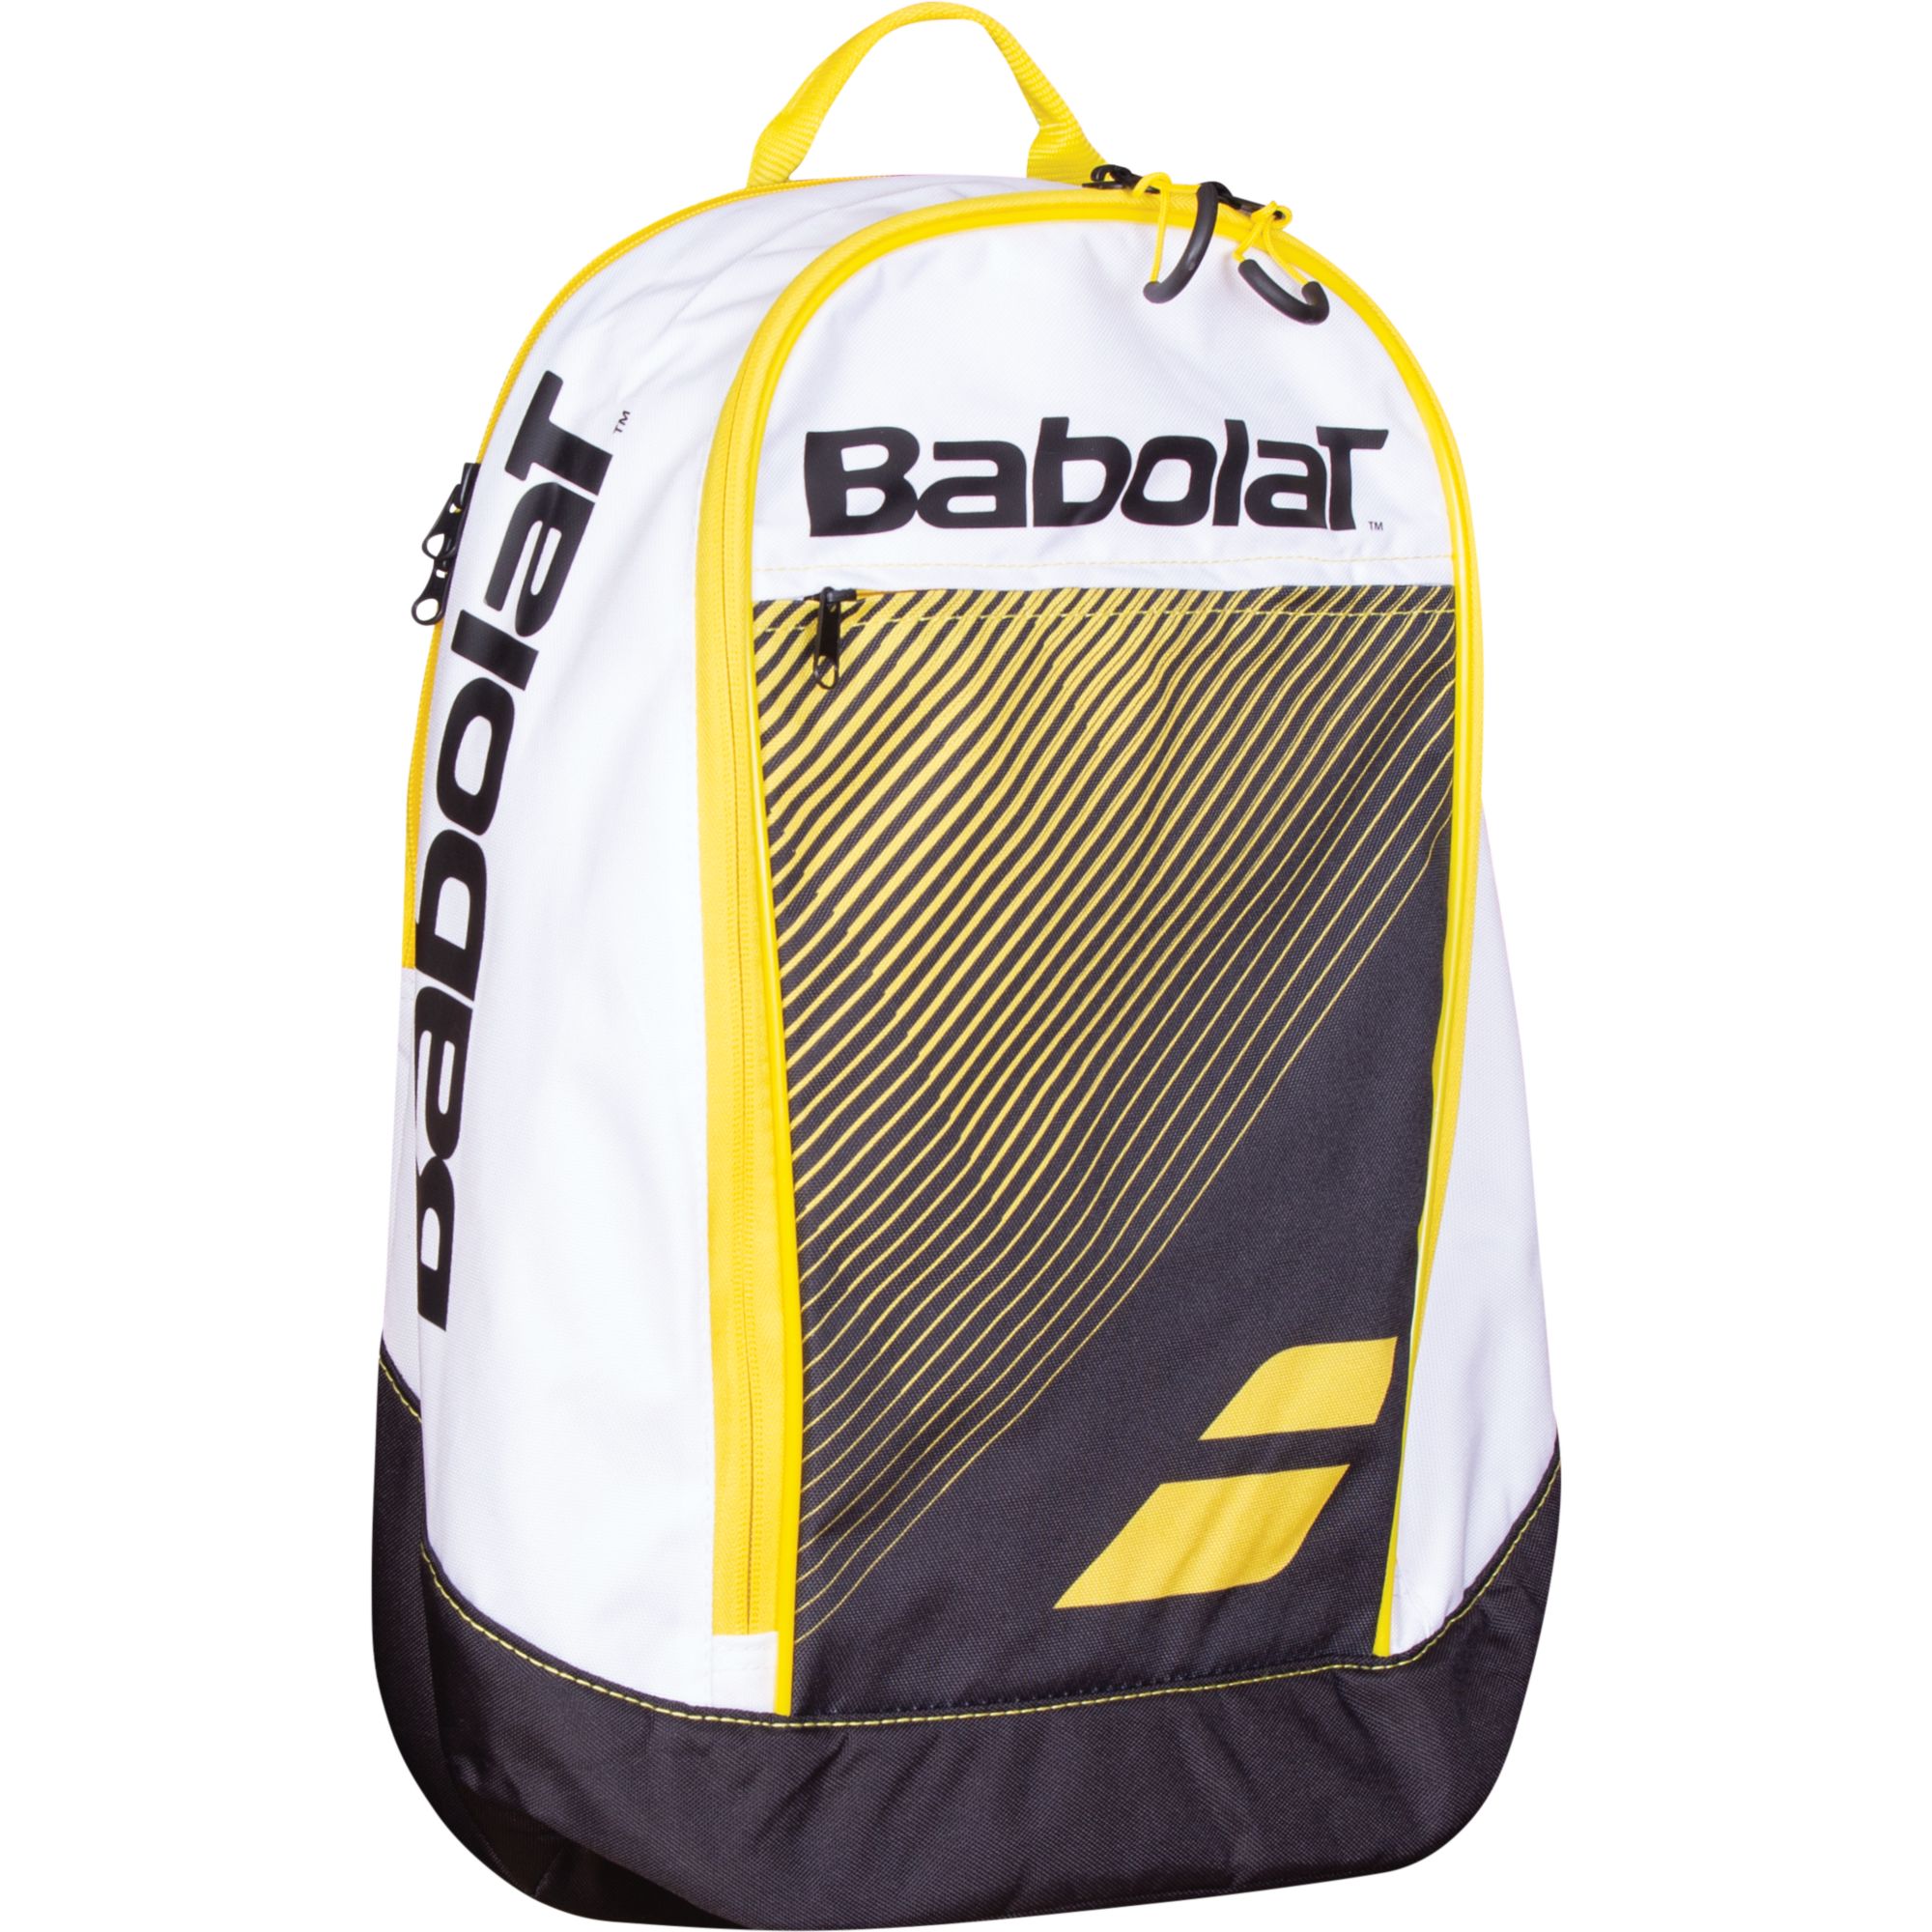 Rucsacuri Tenis Club Backpack Babolat La reduceri Babolat